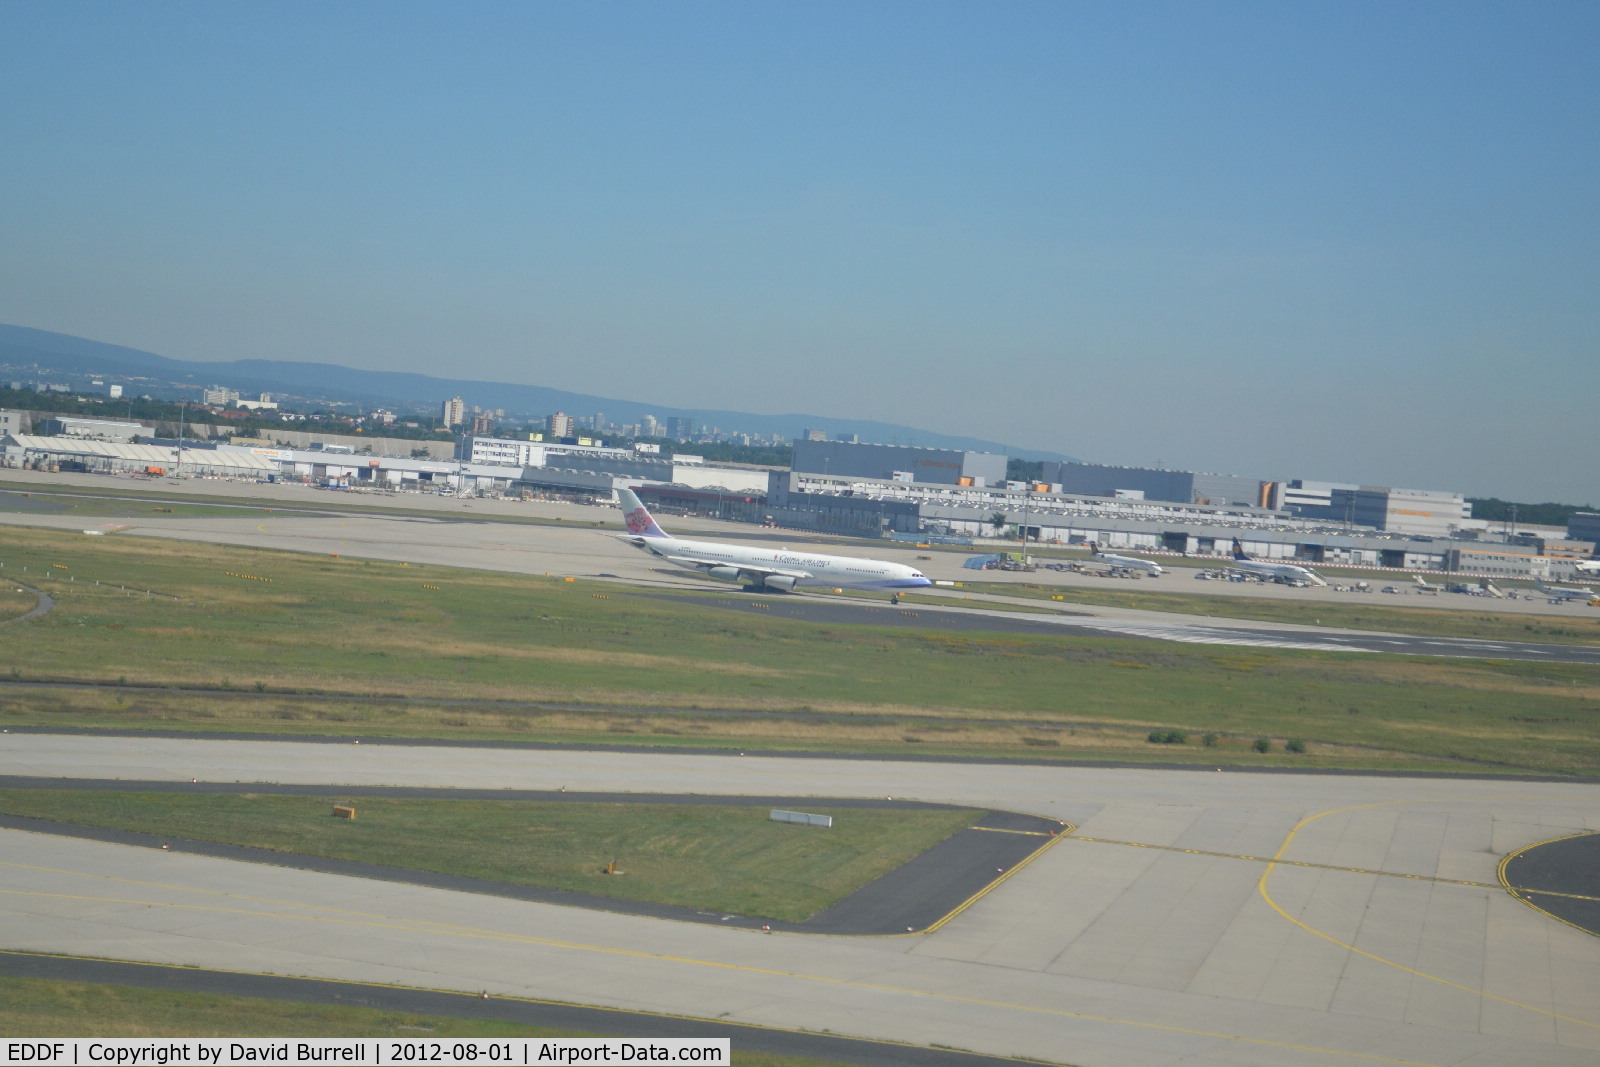 Frankfurt International Airport, Frankfurt am Main Germany (EDDF) - Frankfurt International Airport, Germany landing.